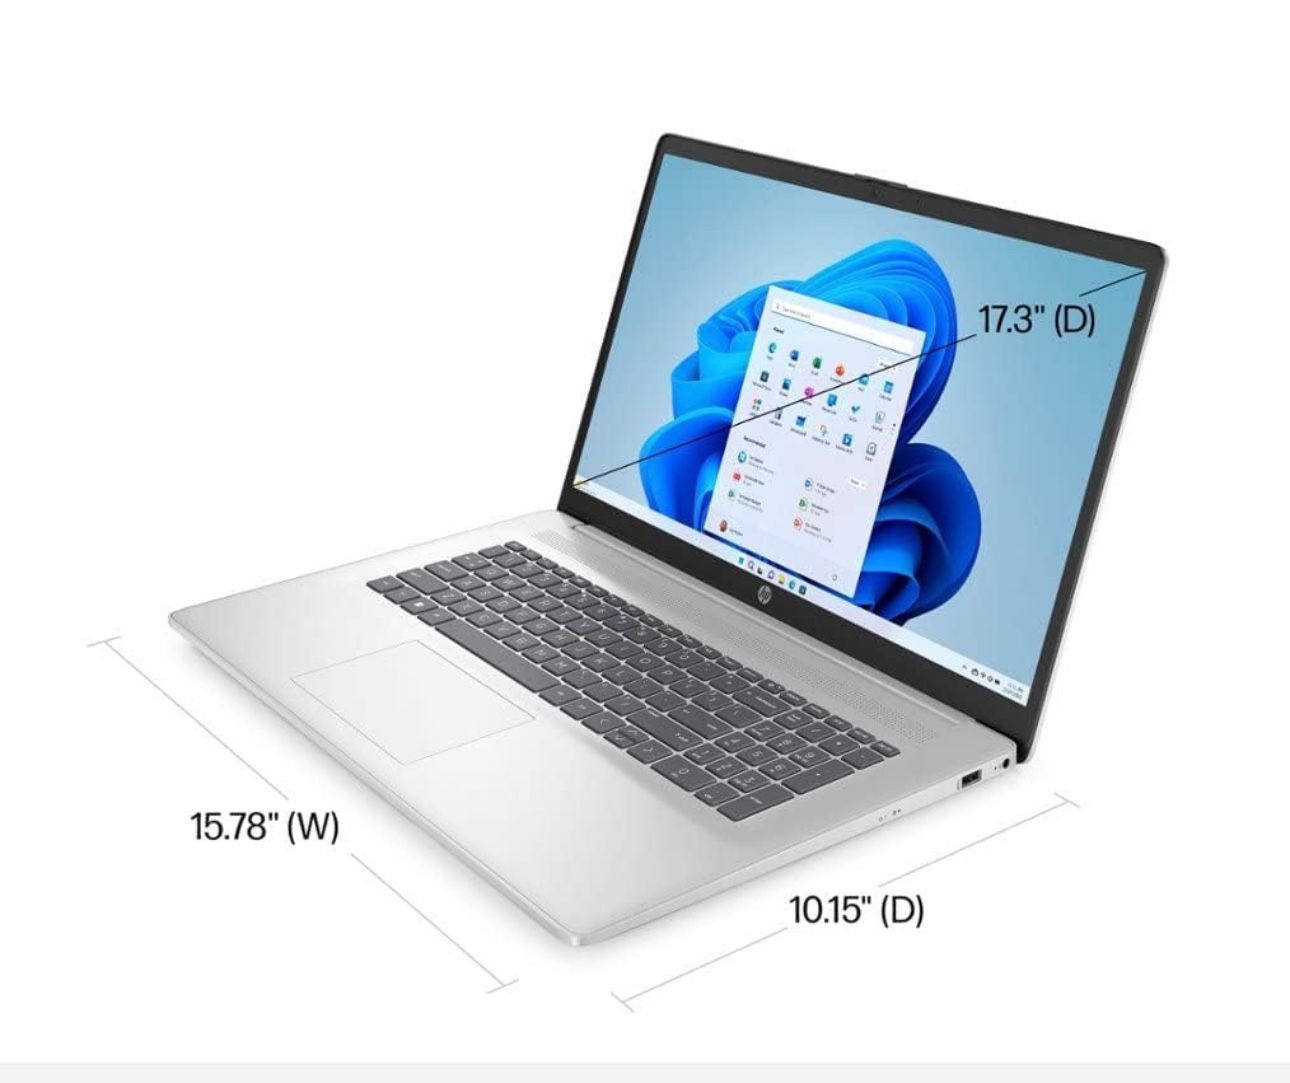 HP Laptop, Intel Core I7 Touch Screen Laptop